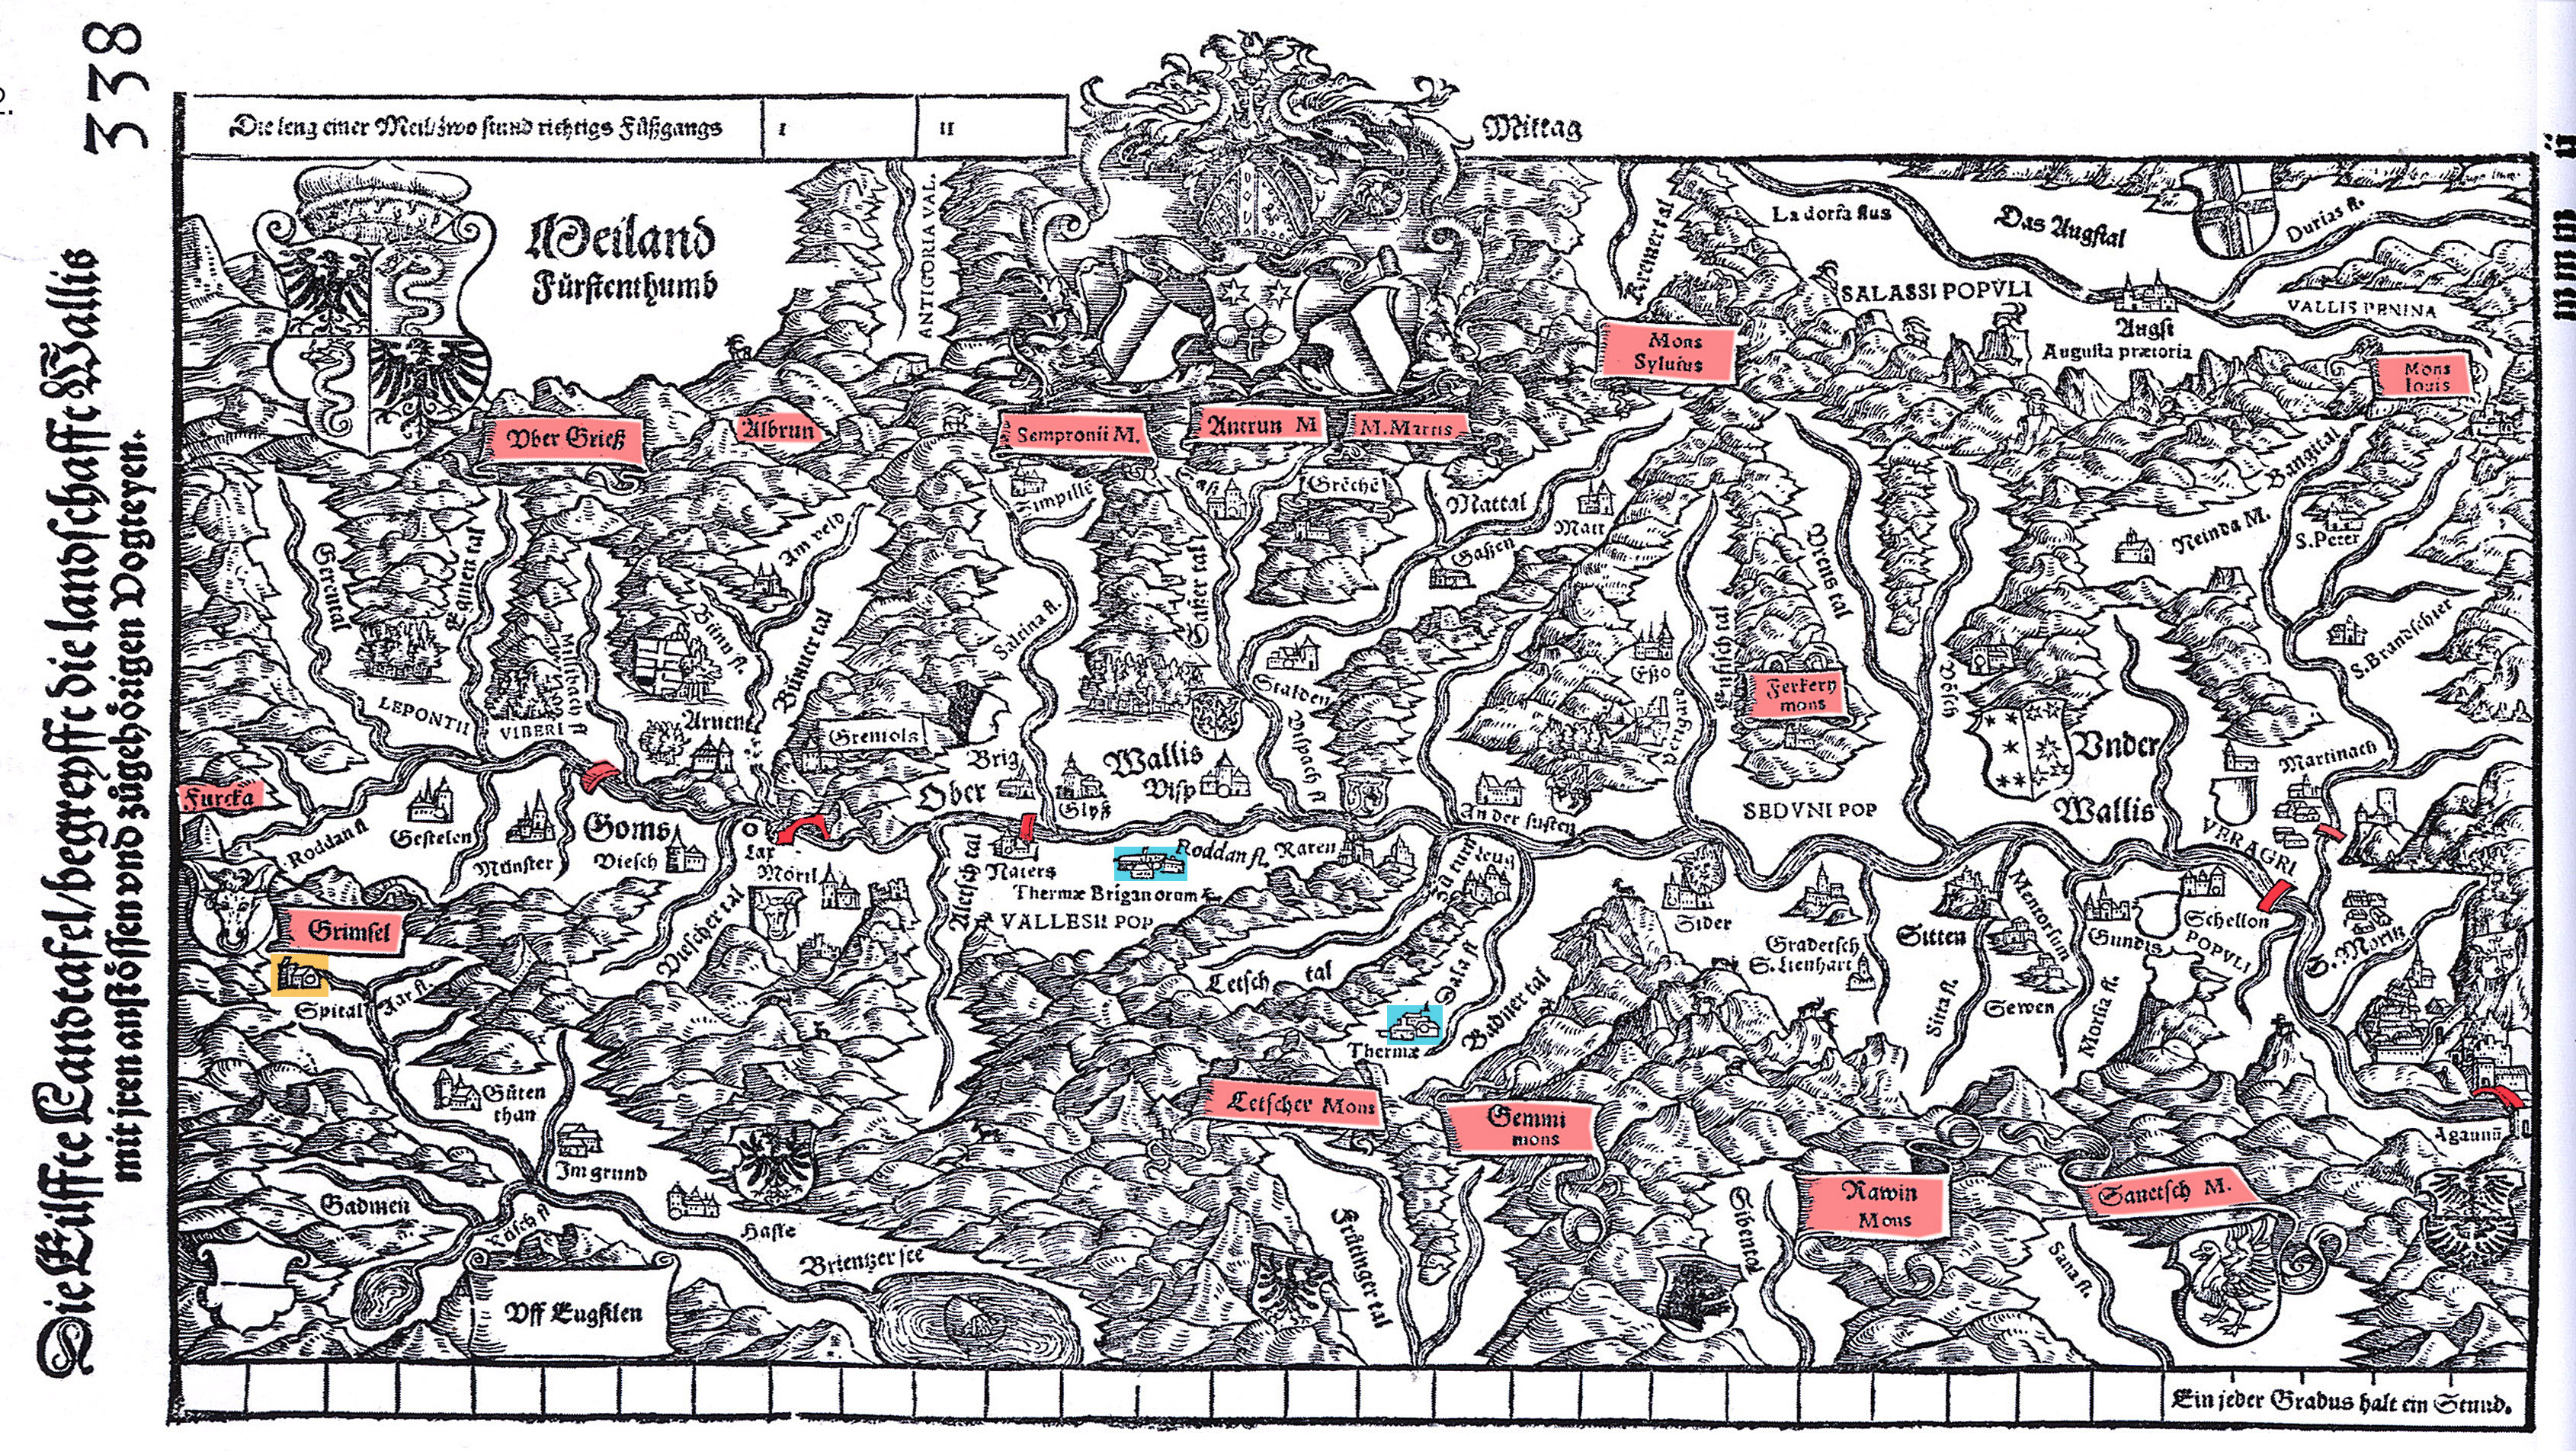 Tschudi 1548